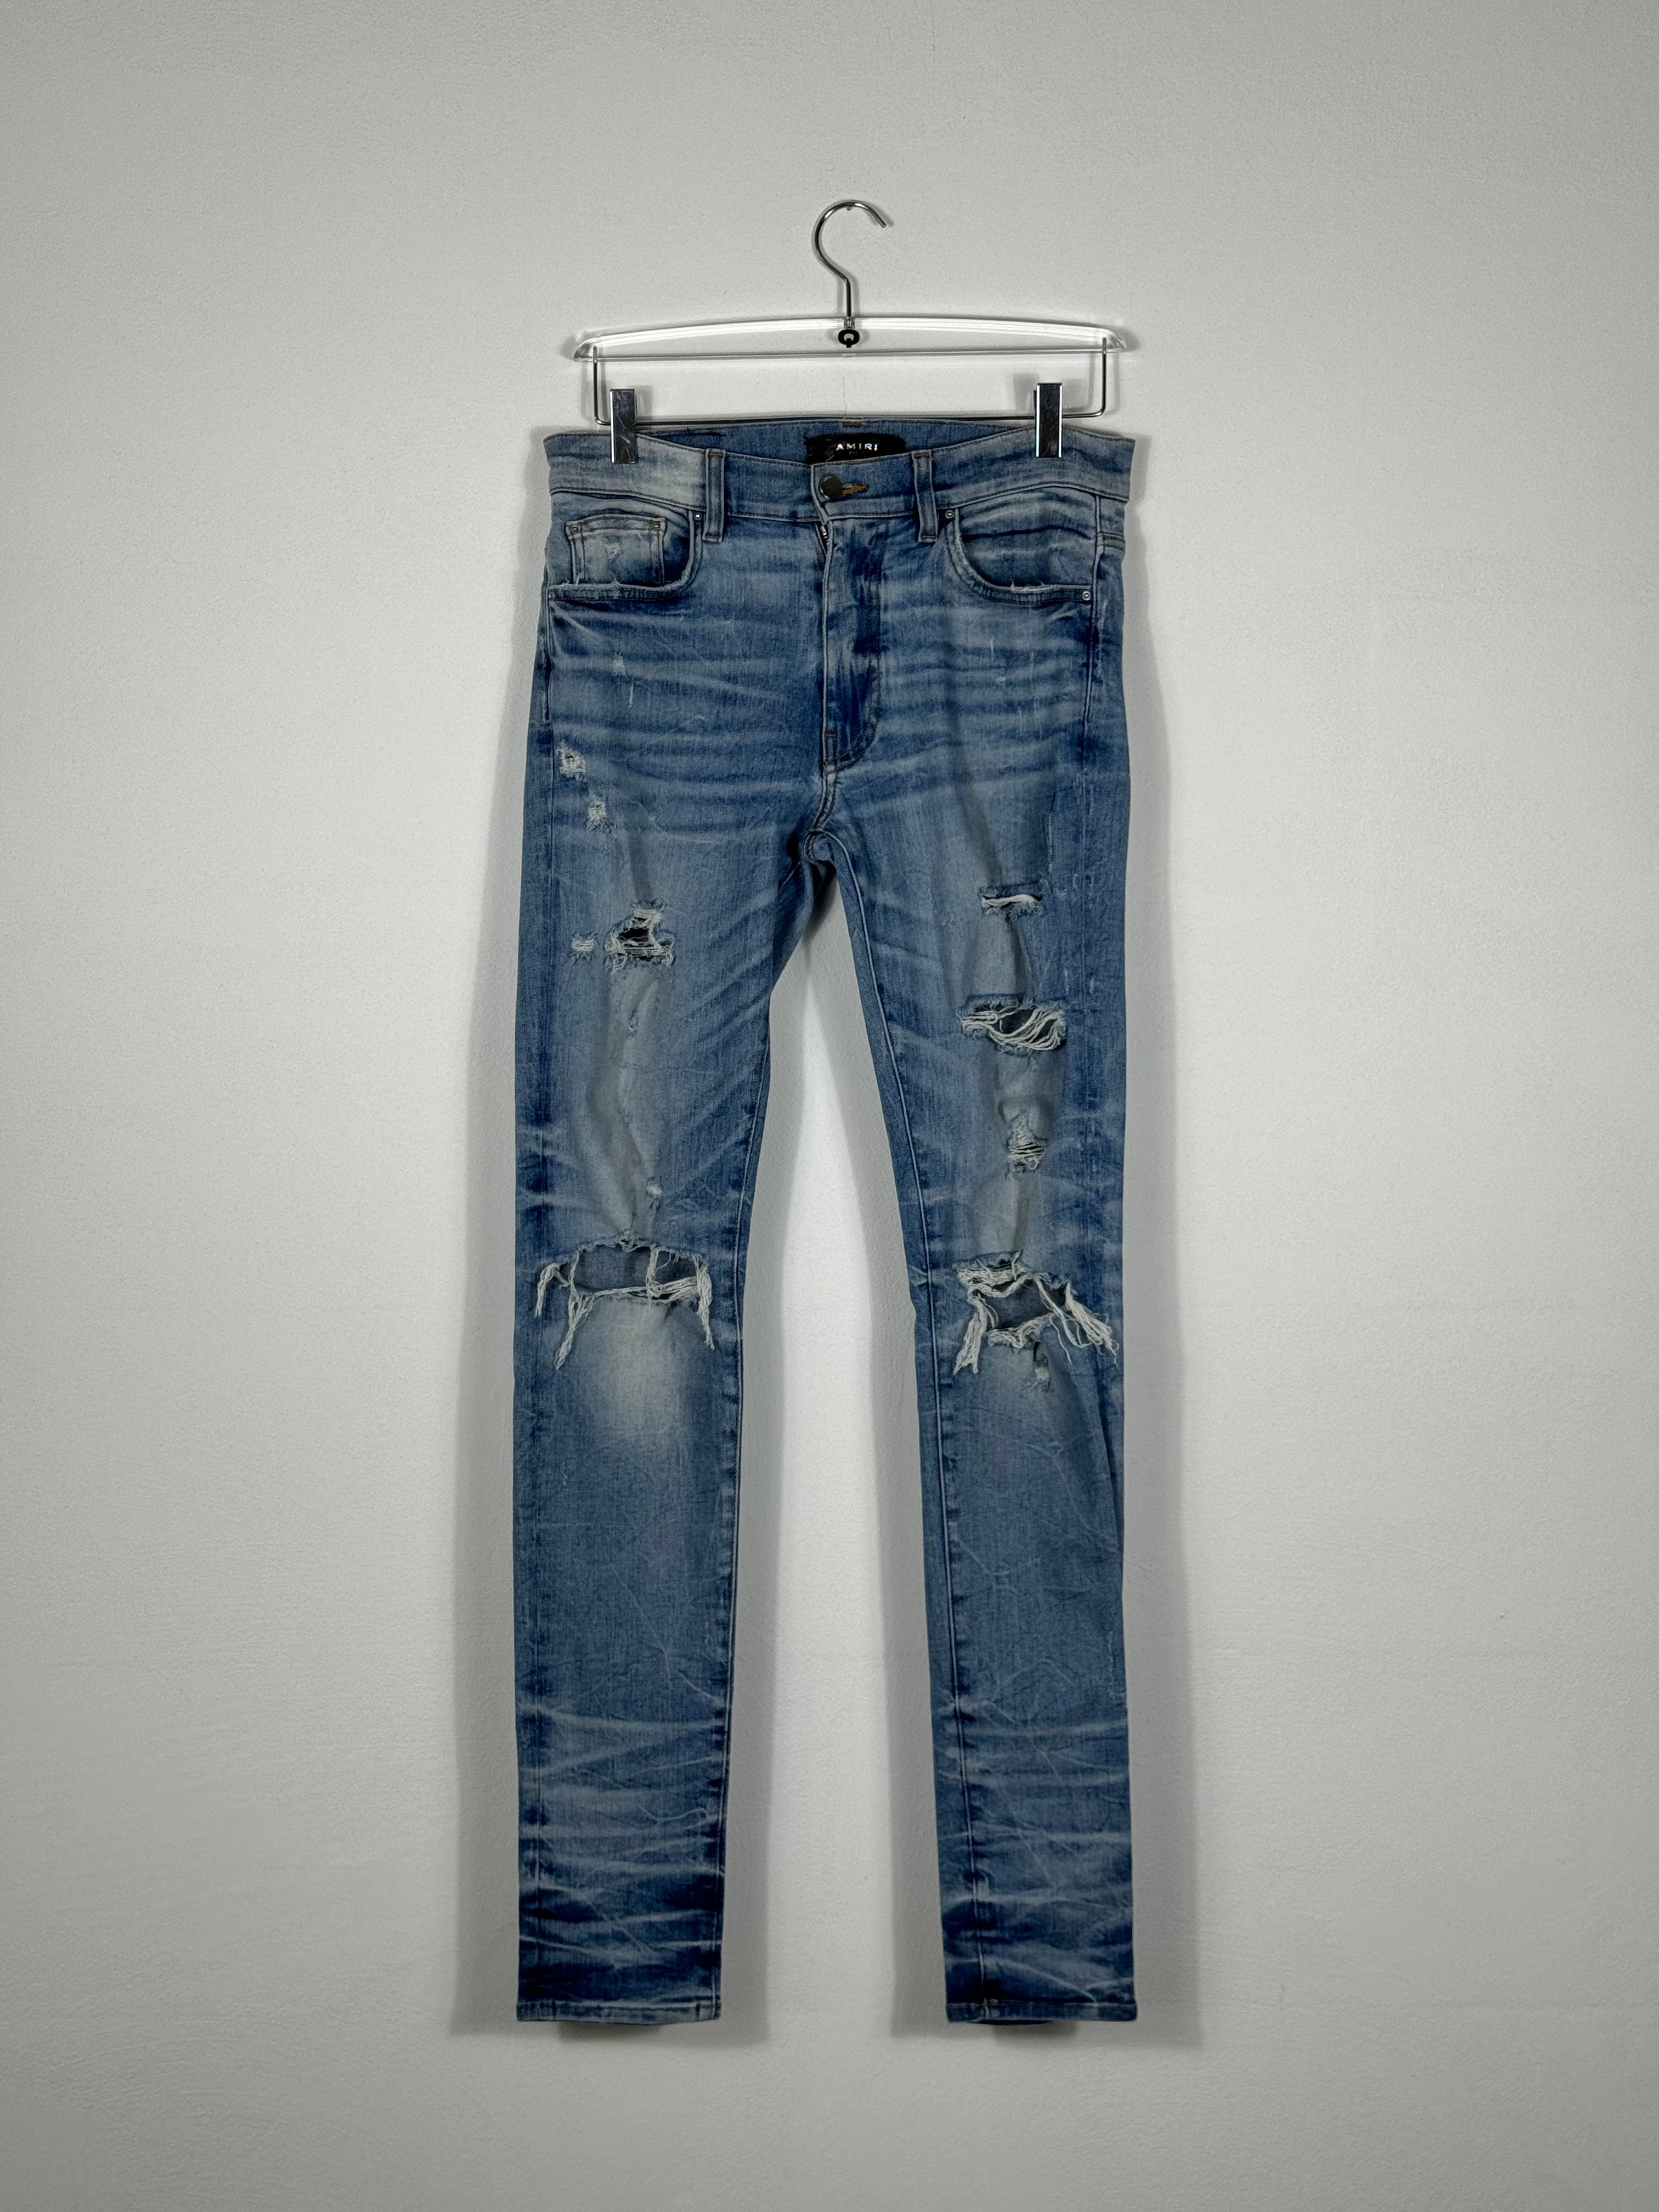 Ripped Jeans by Sfera Ebbasta